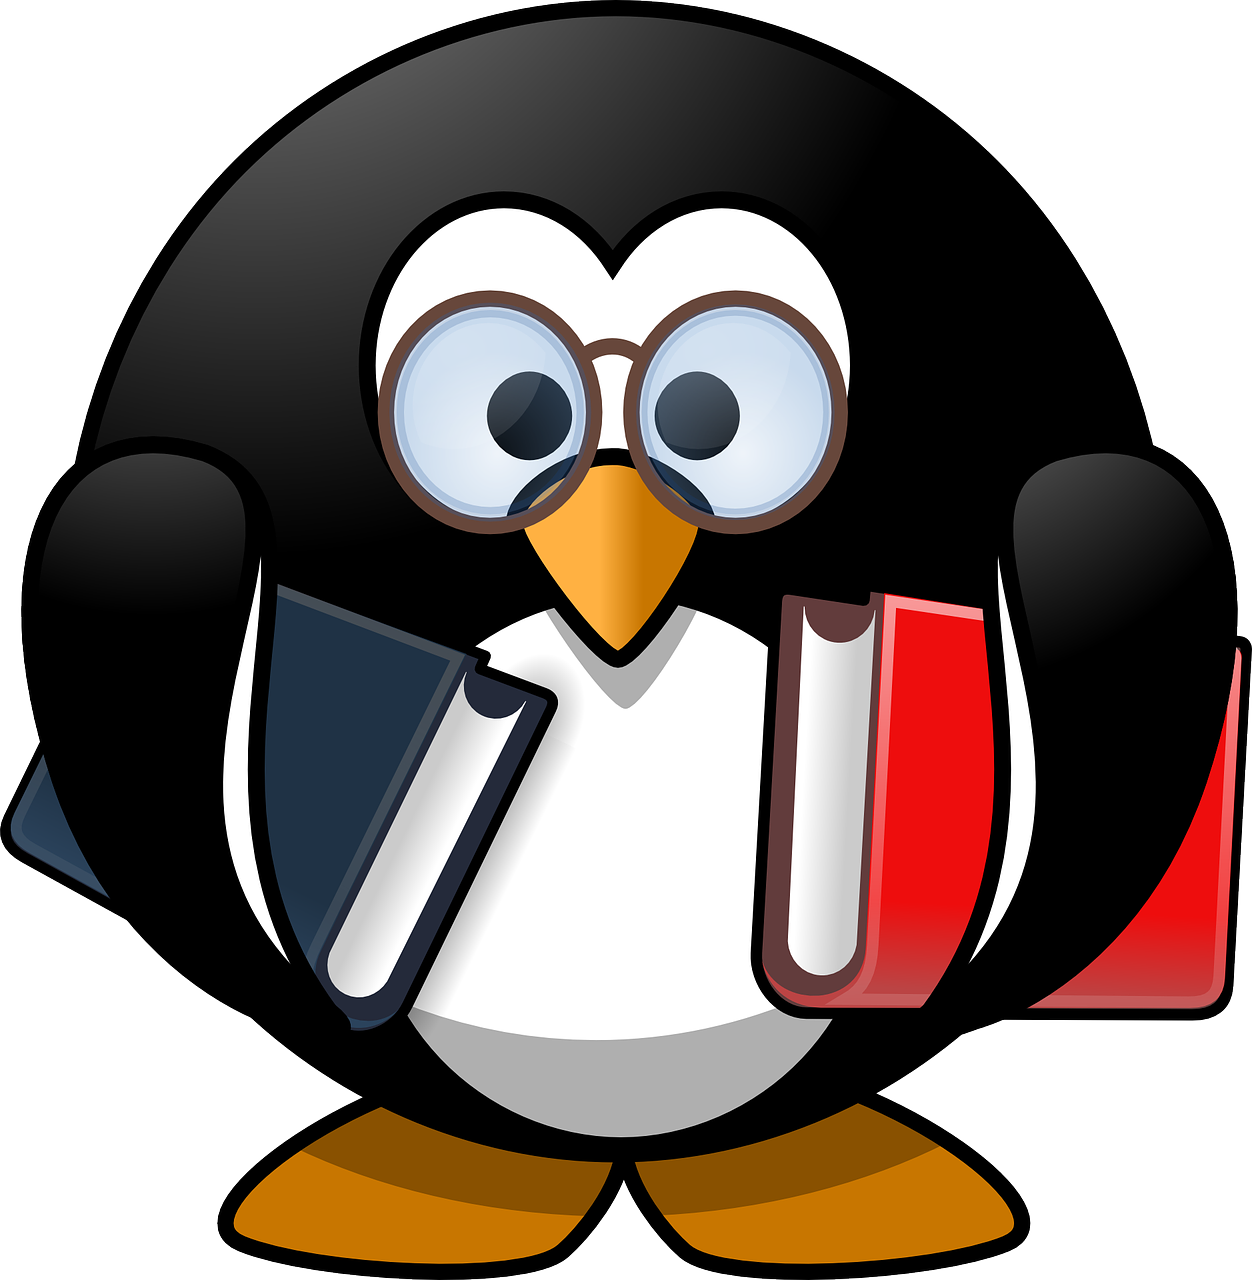 Penguin With Beak Slightly Open Clip Art at  - vector clip art  online, royalty free & public domain